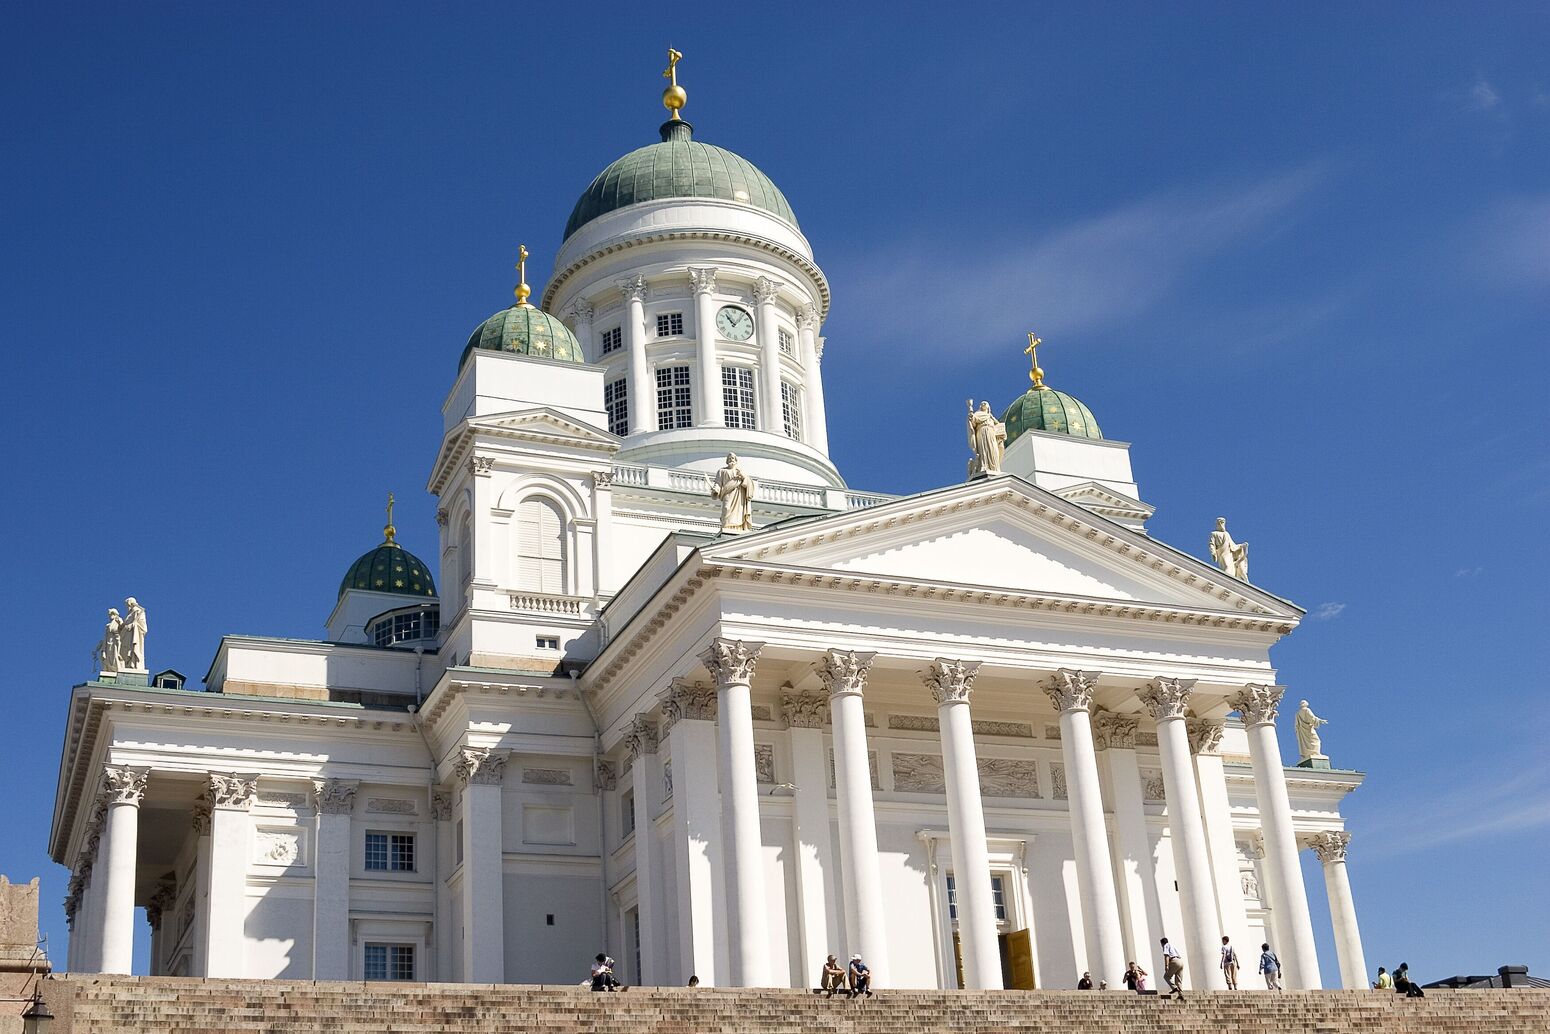 Northern Europe, cathedral, sky, Helsinki, building, Destination, Finland